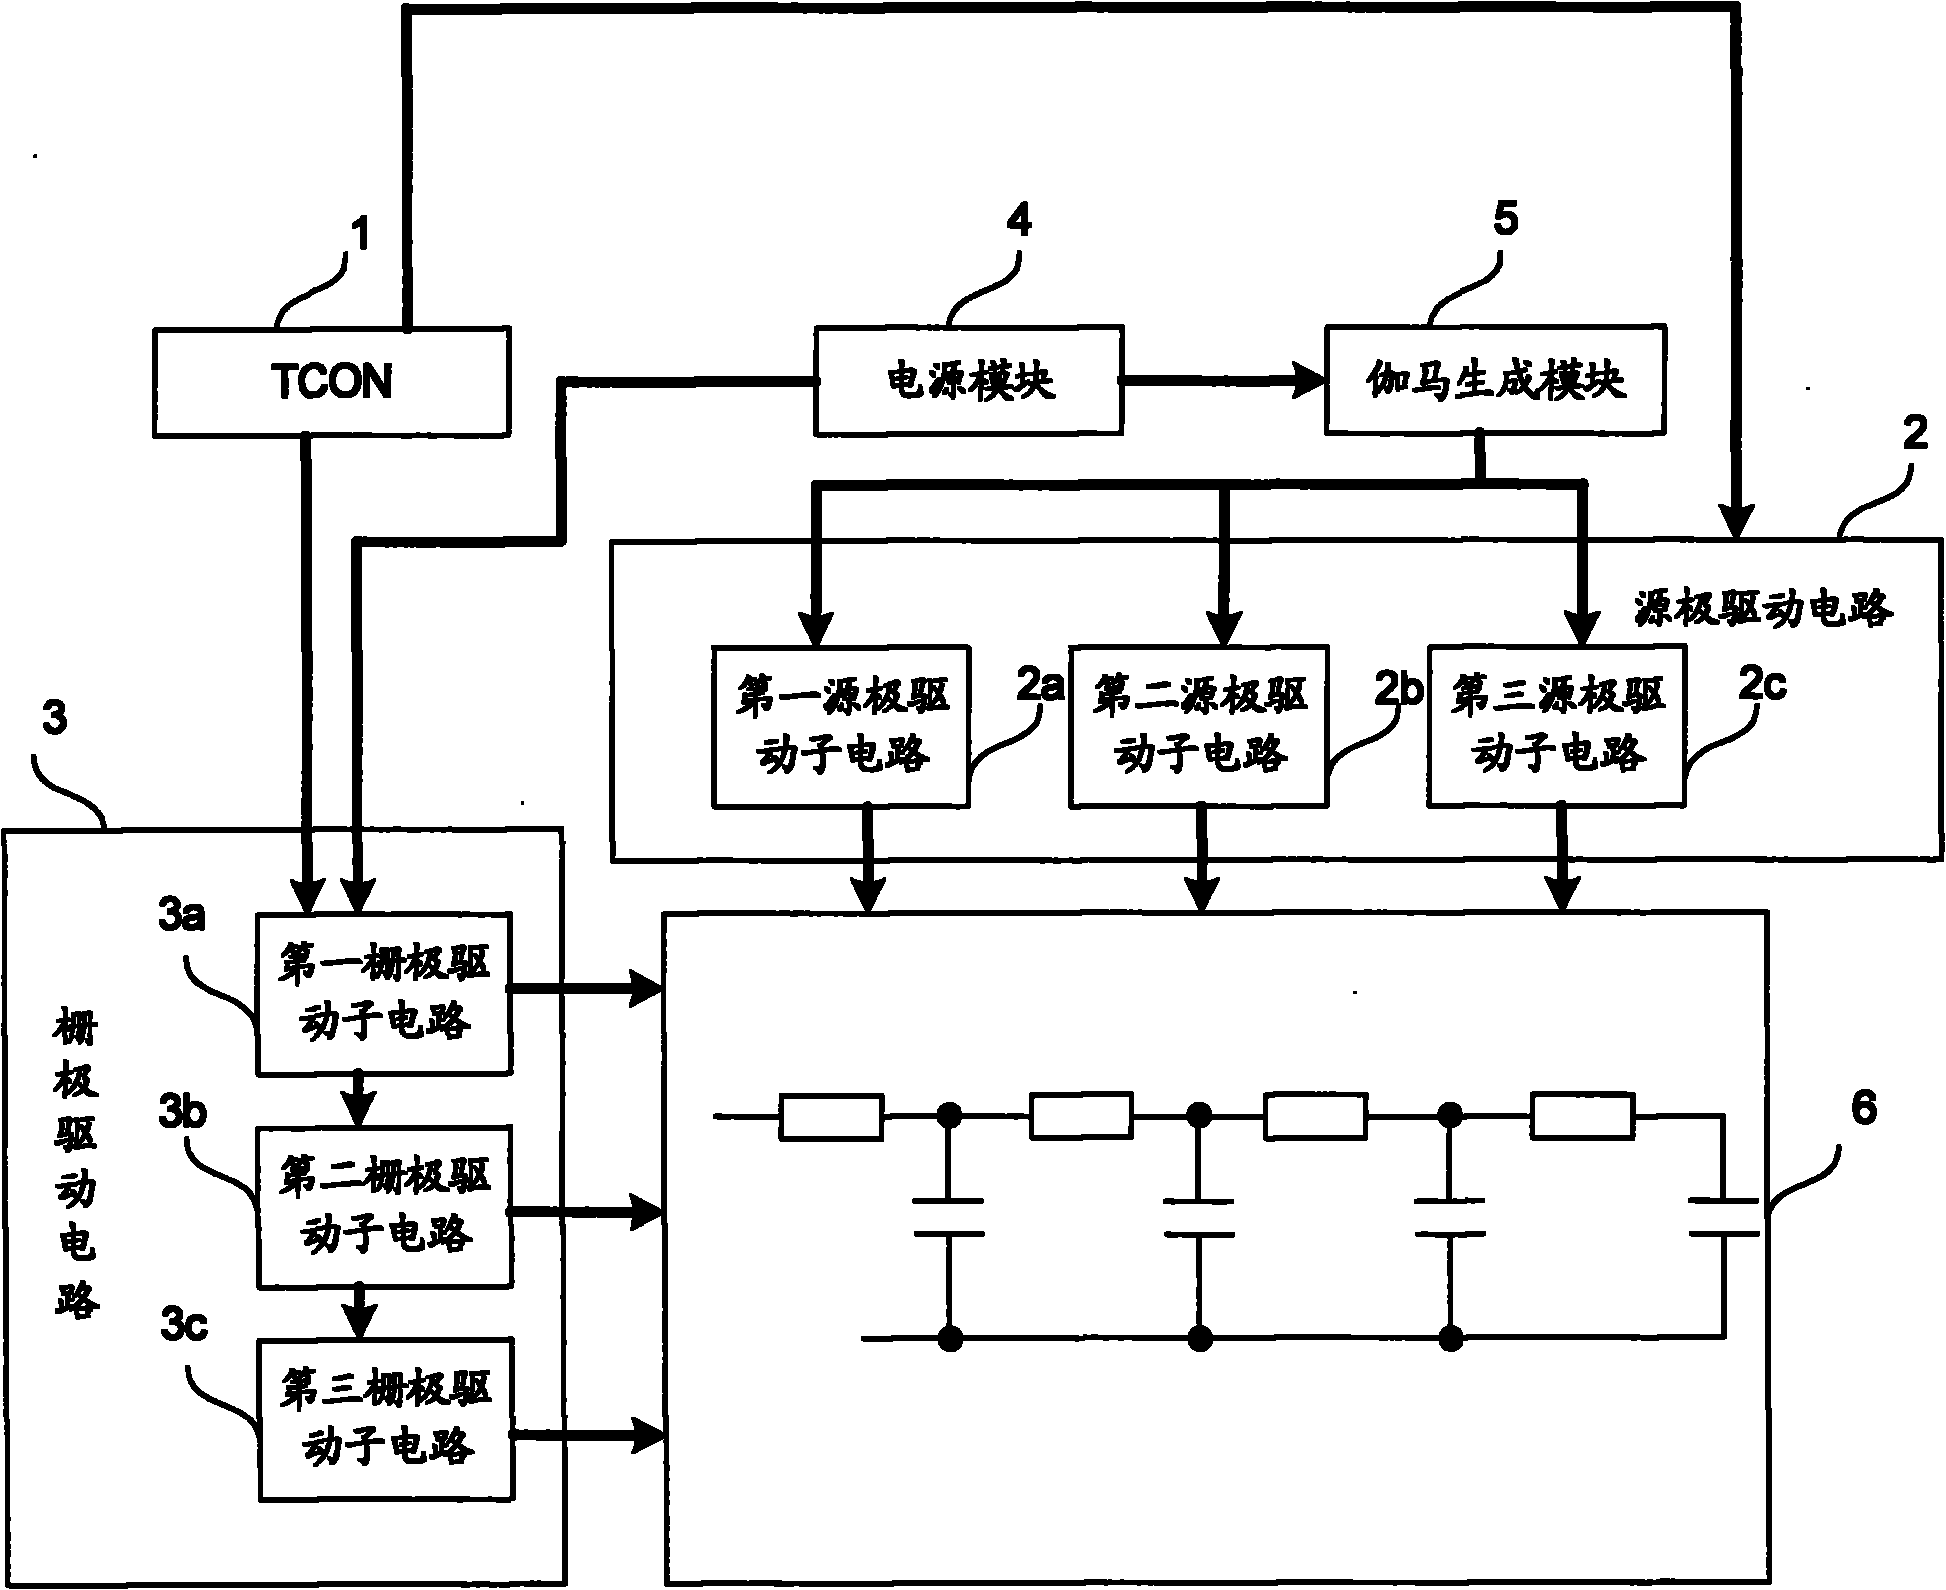 TFT-LCD (Thin Film Transistor-Liquid Crystal Display) drive circuit